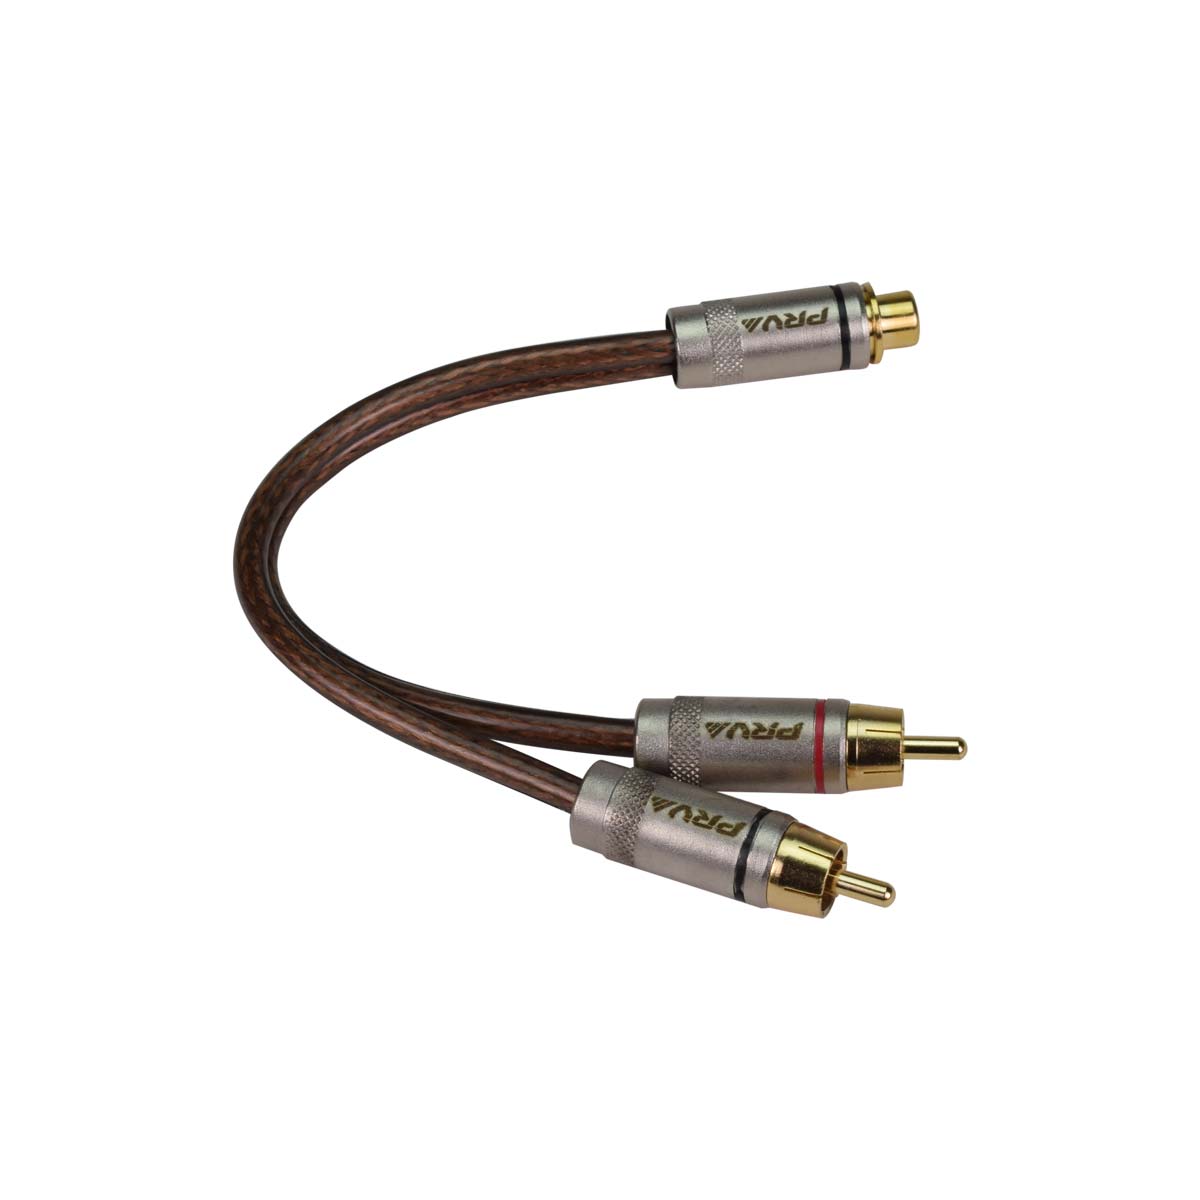 PRV Audio SC-Y1F PRO TECHNOISE Oxygen-Free Copper Signal Cables